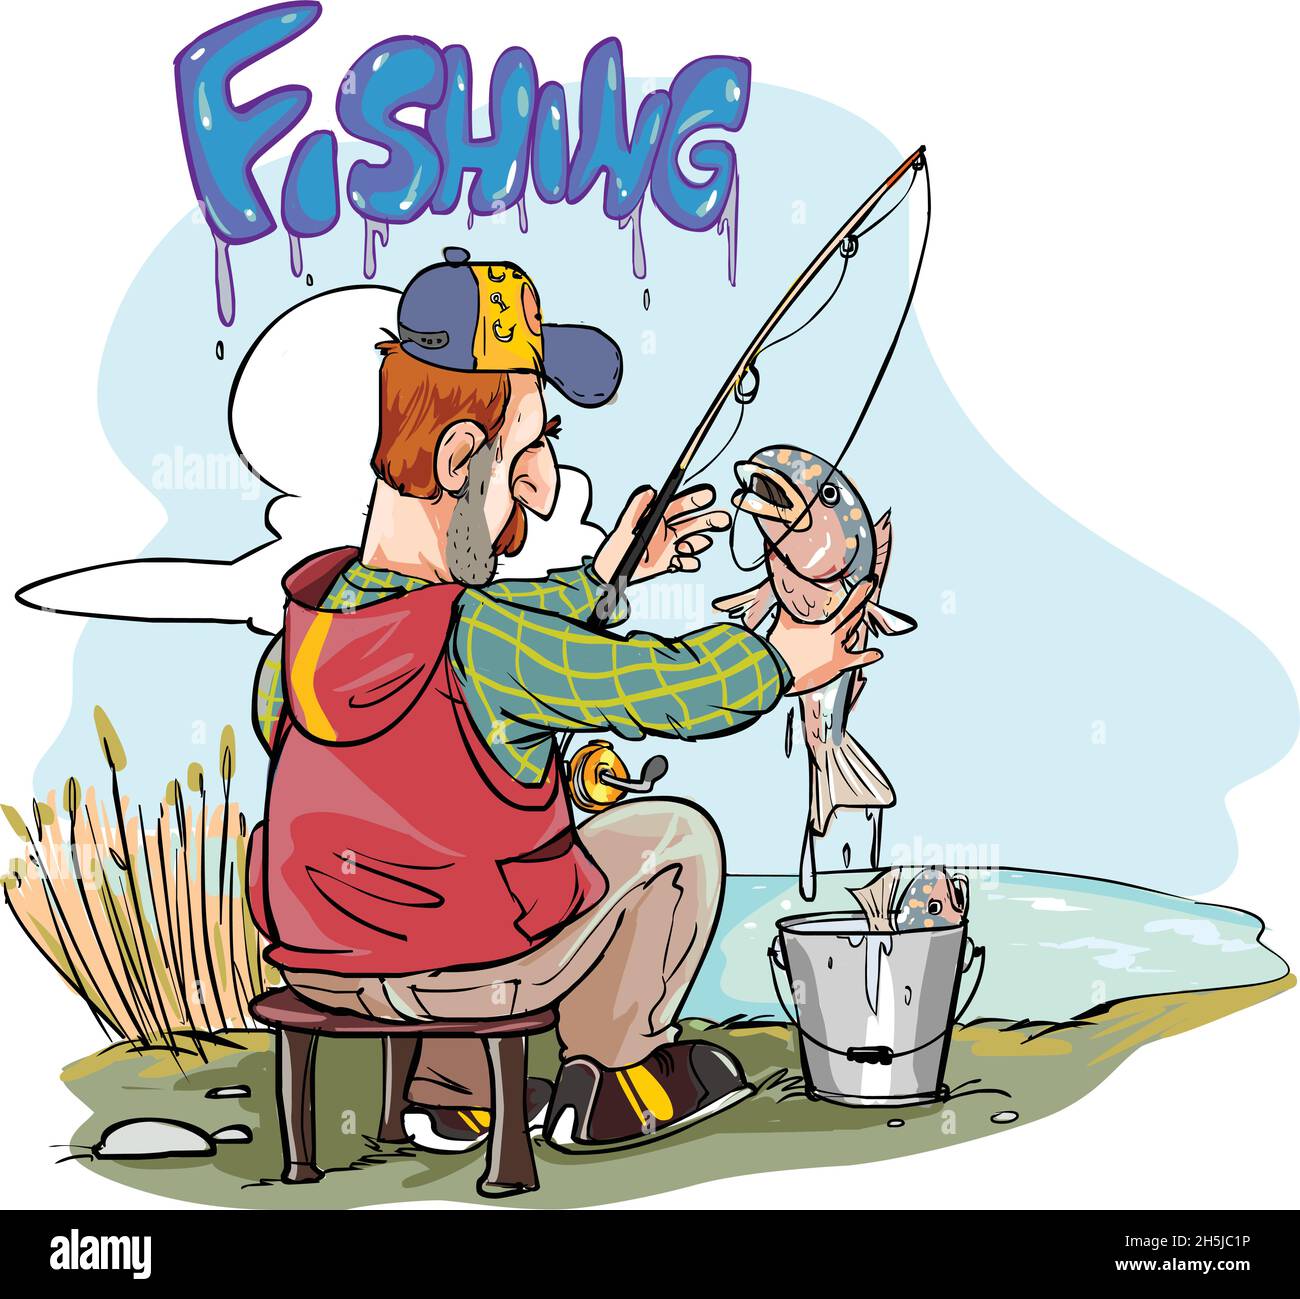 a man fishing illustration Stock Vector Image & Art - Alamy